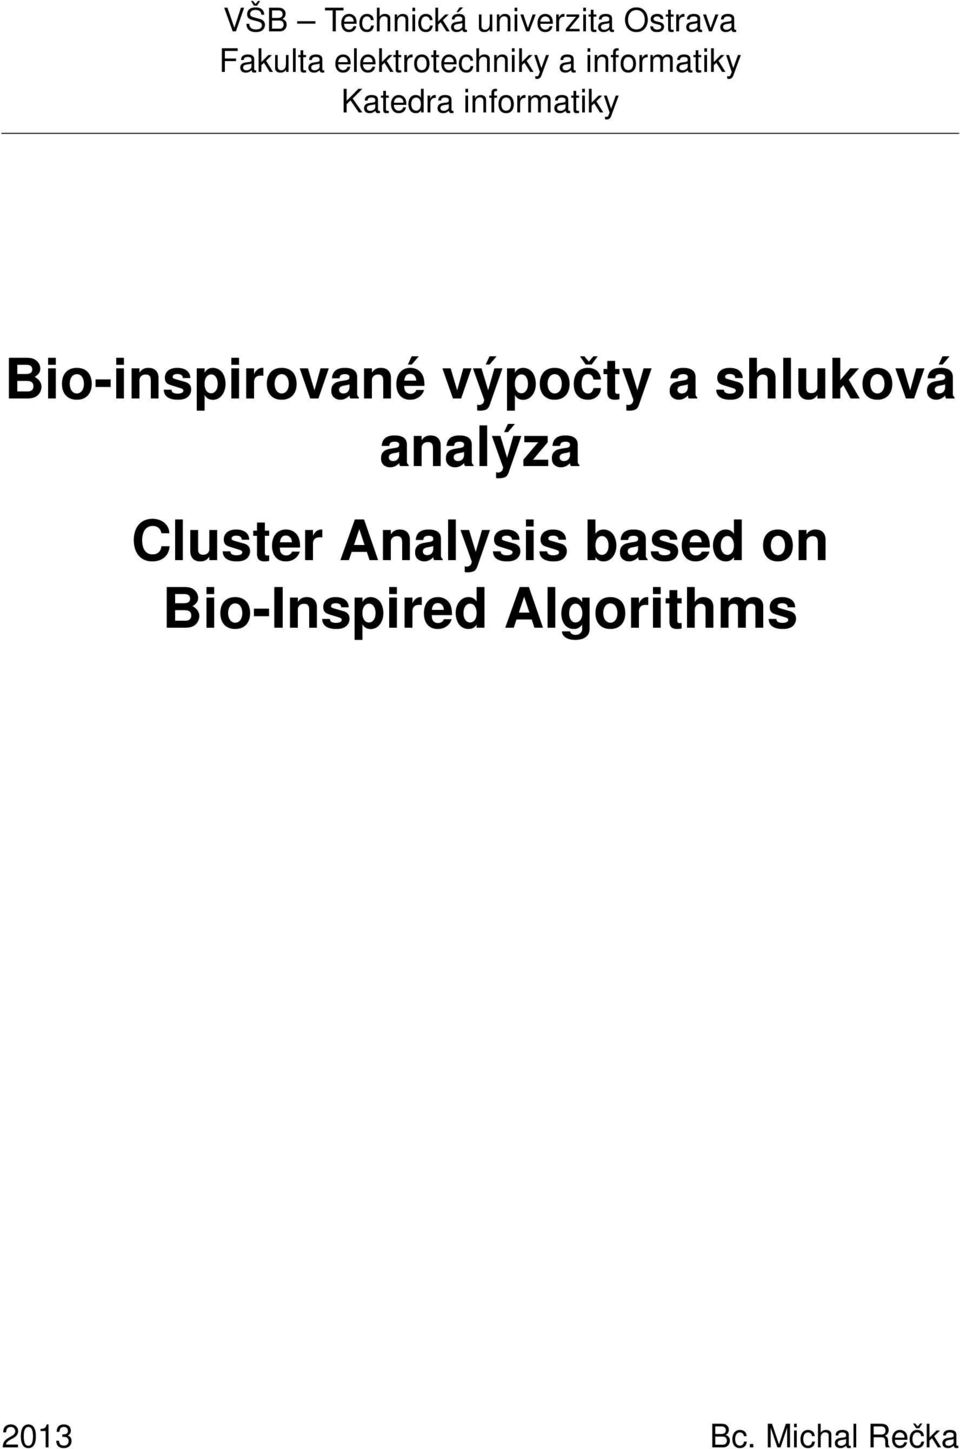 Bio-inspirované výpočty a shluková analýza Cluster